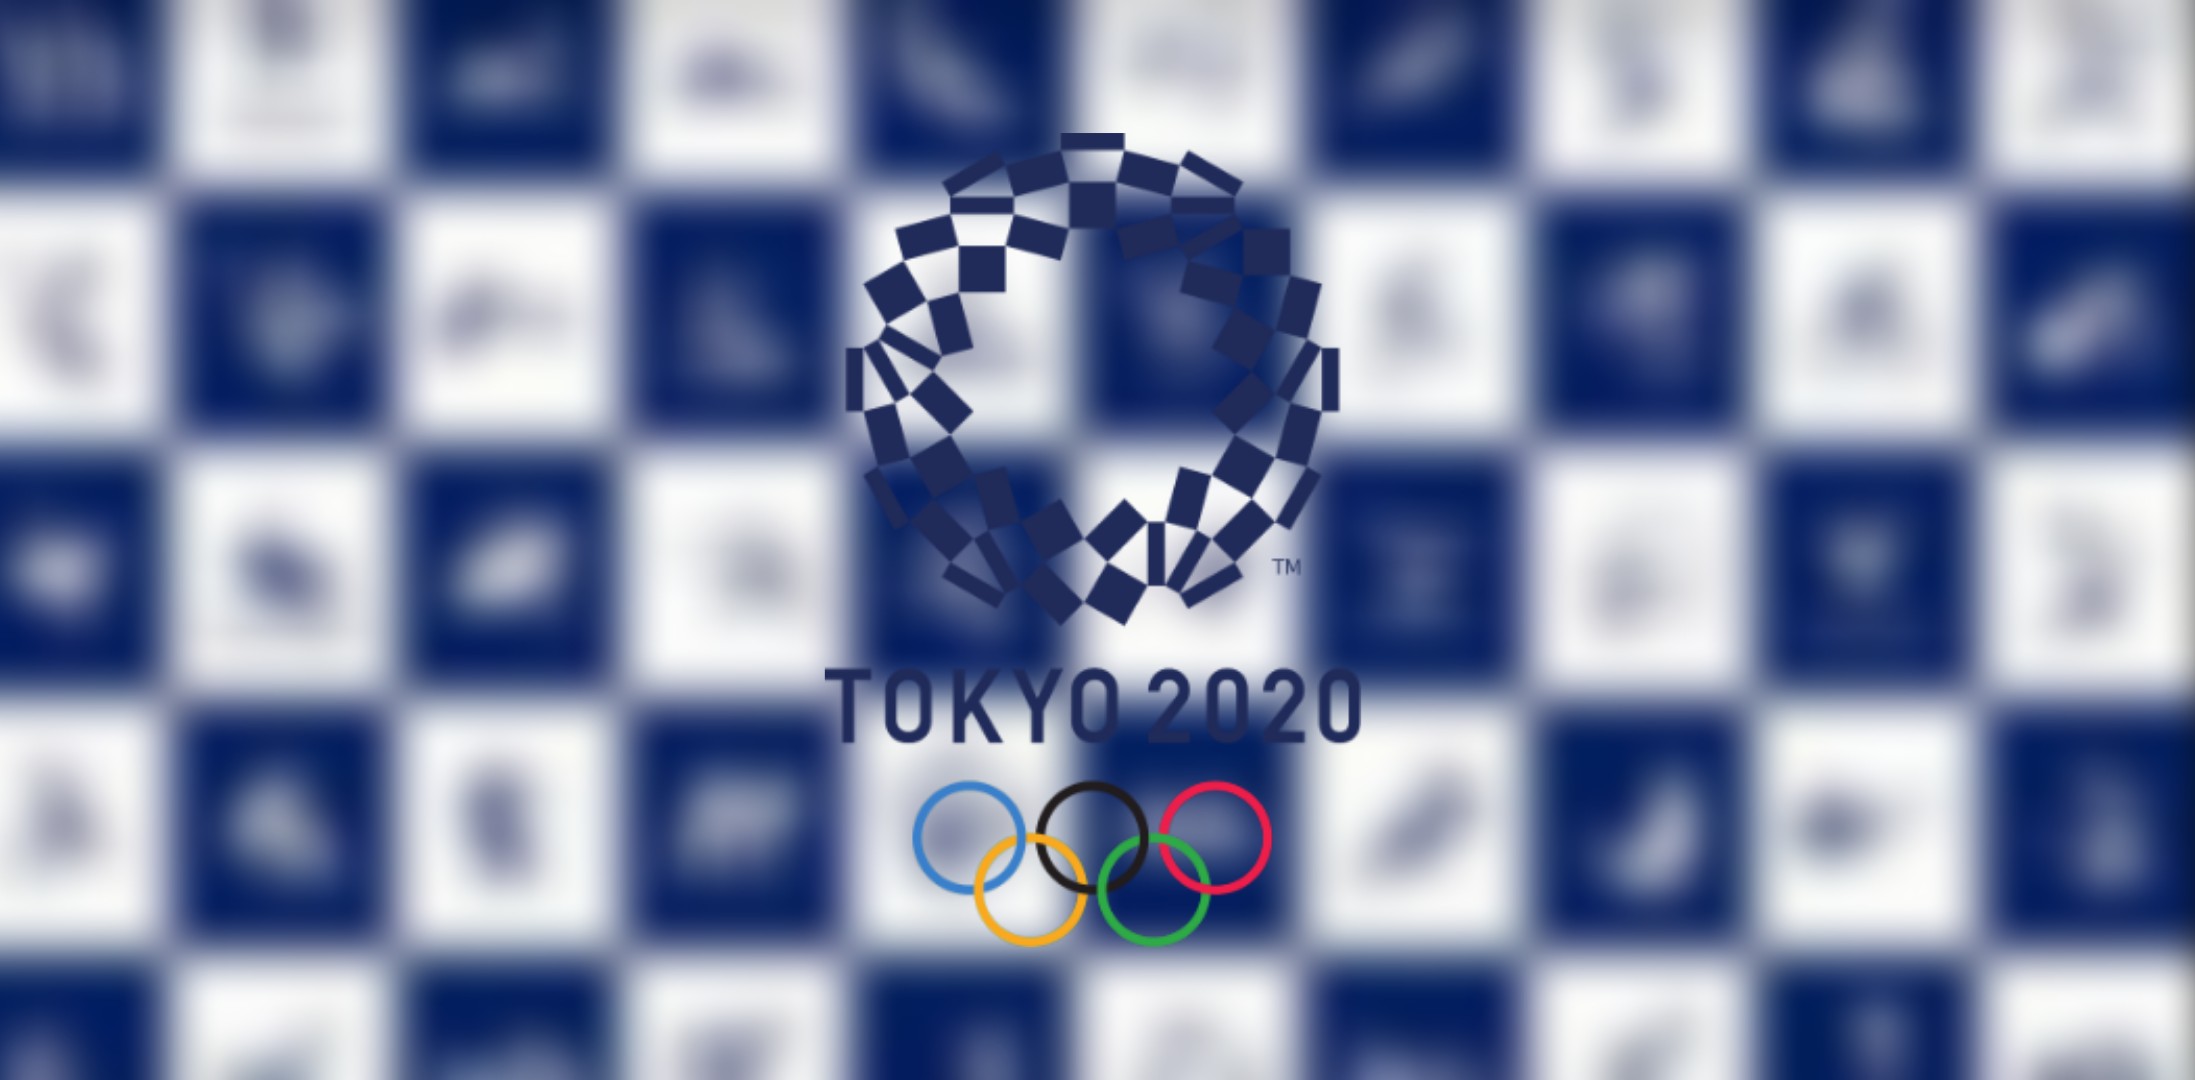 Jadual olimpik tokyo 2020 malaysia